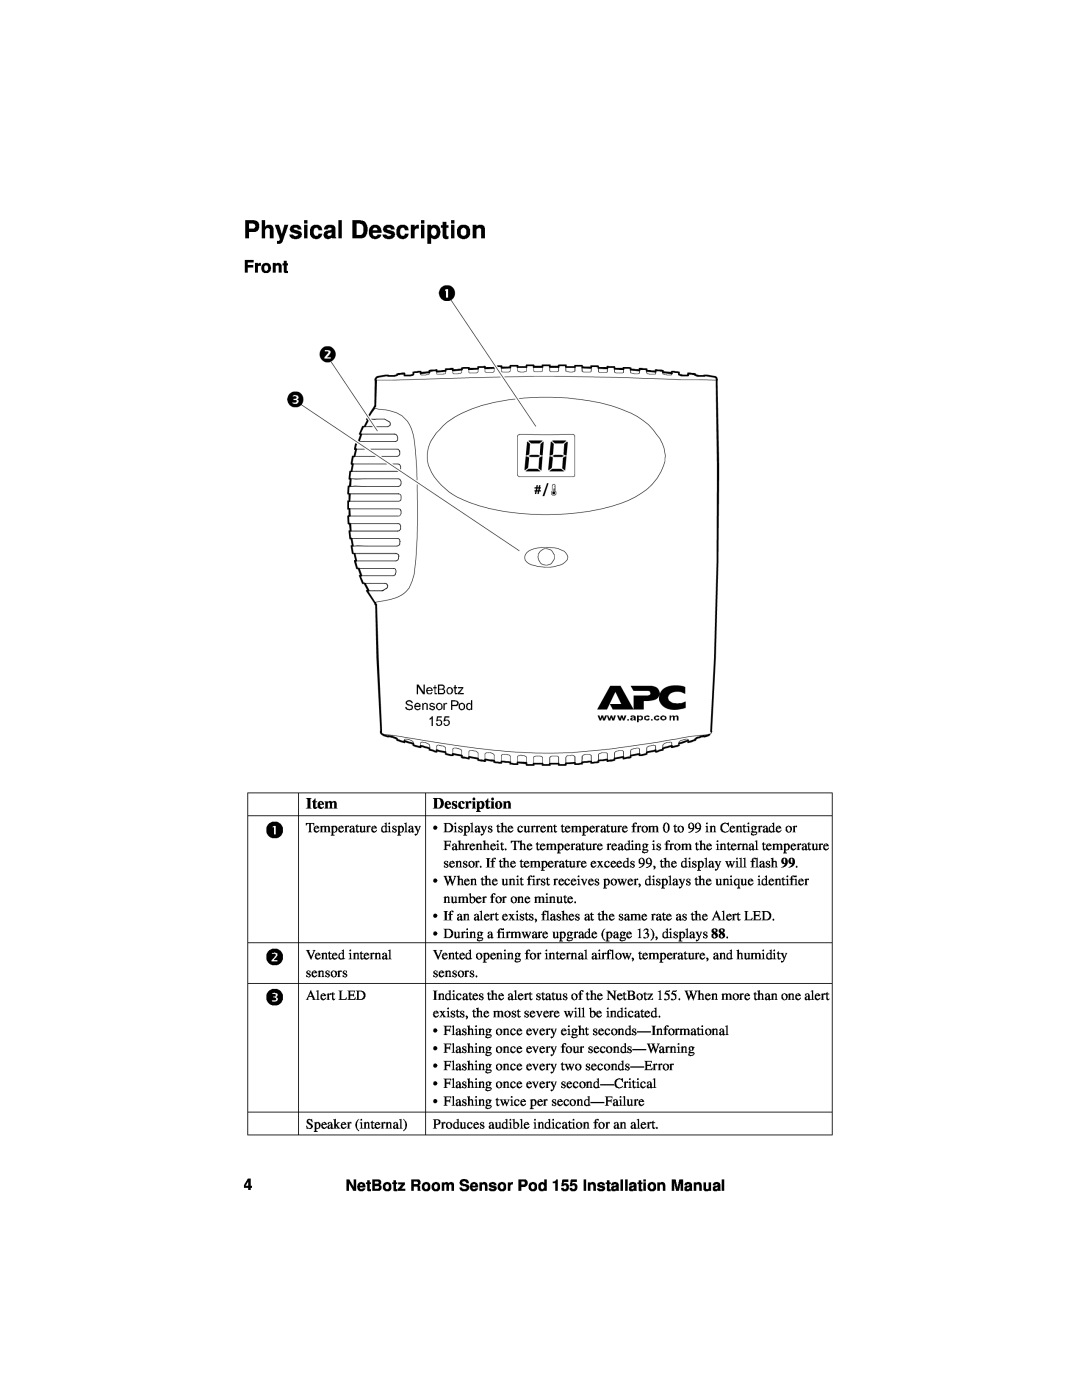 APC NBPD0155 installation manual Physical Description, Front 